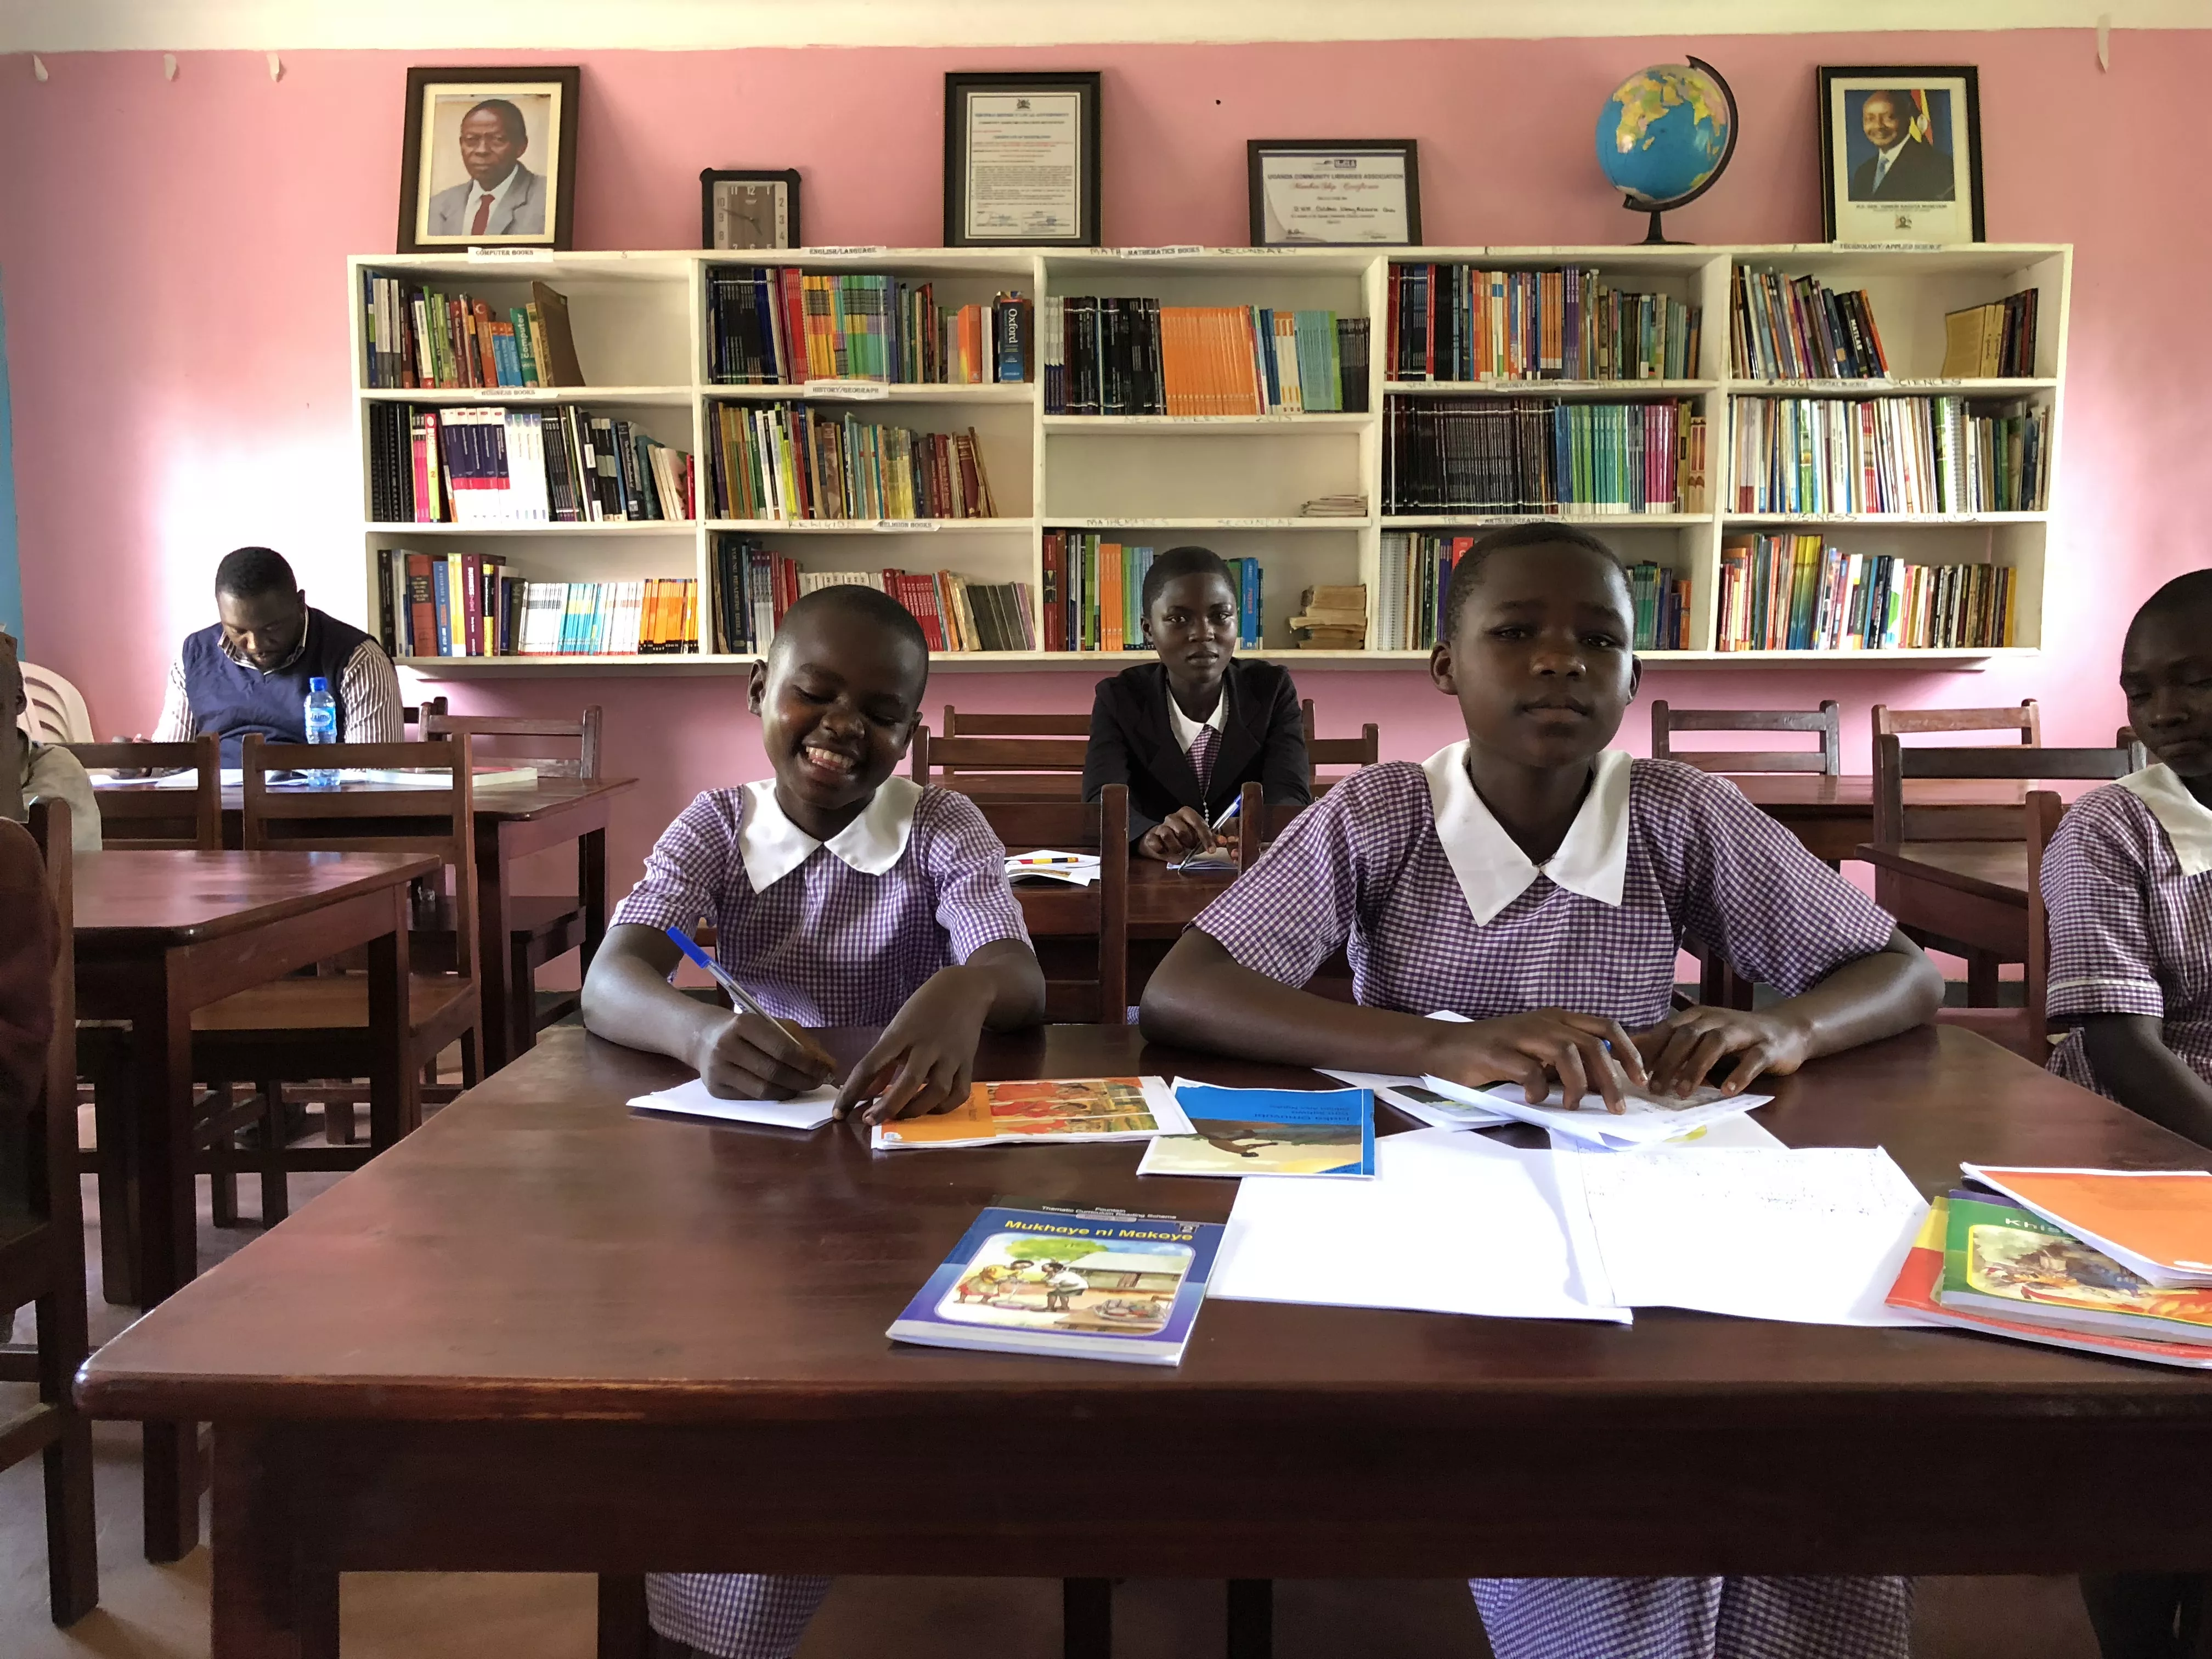 School children sit at a desk in a community library in Uganda